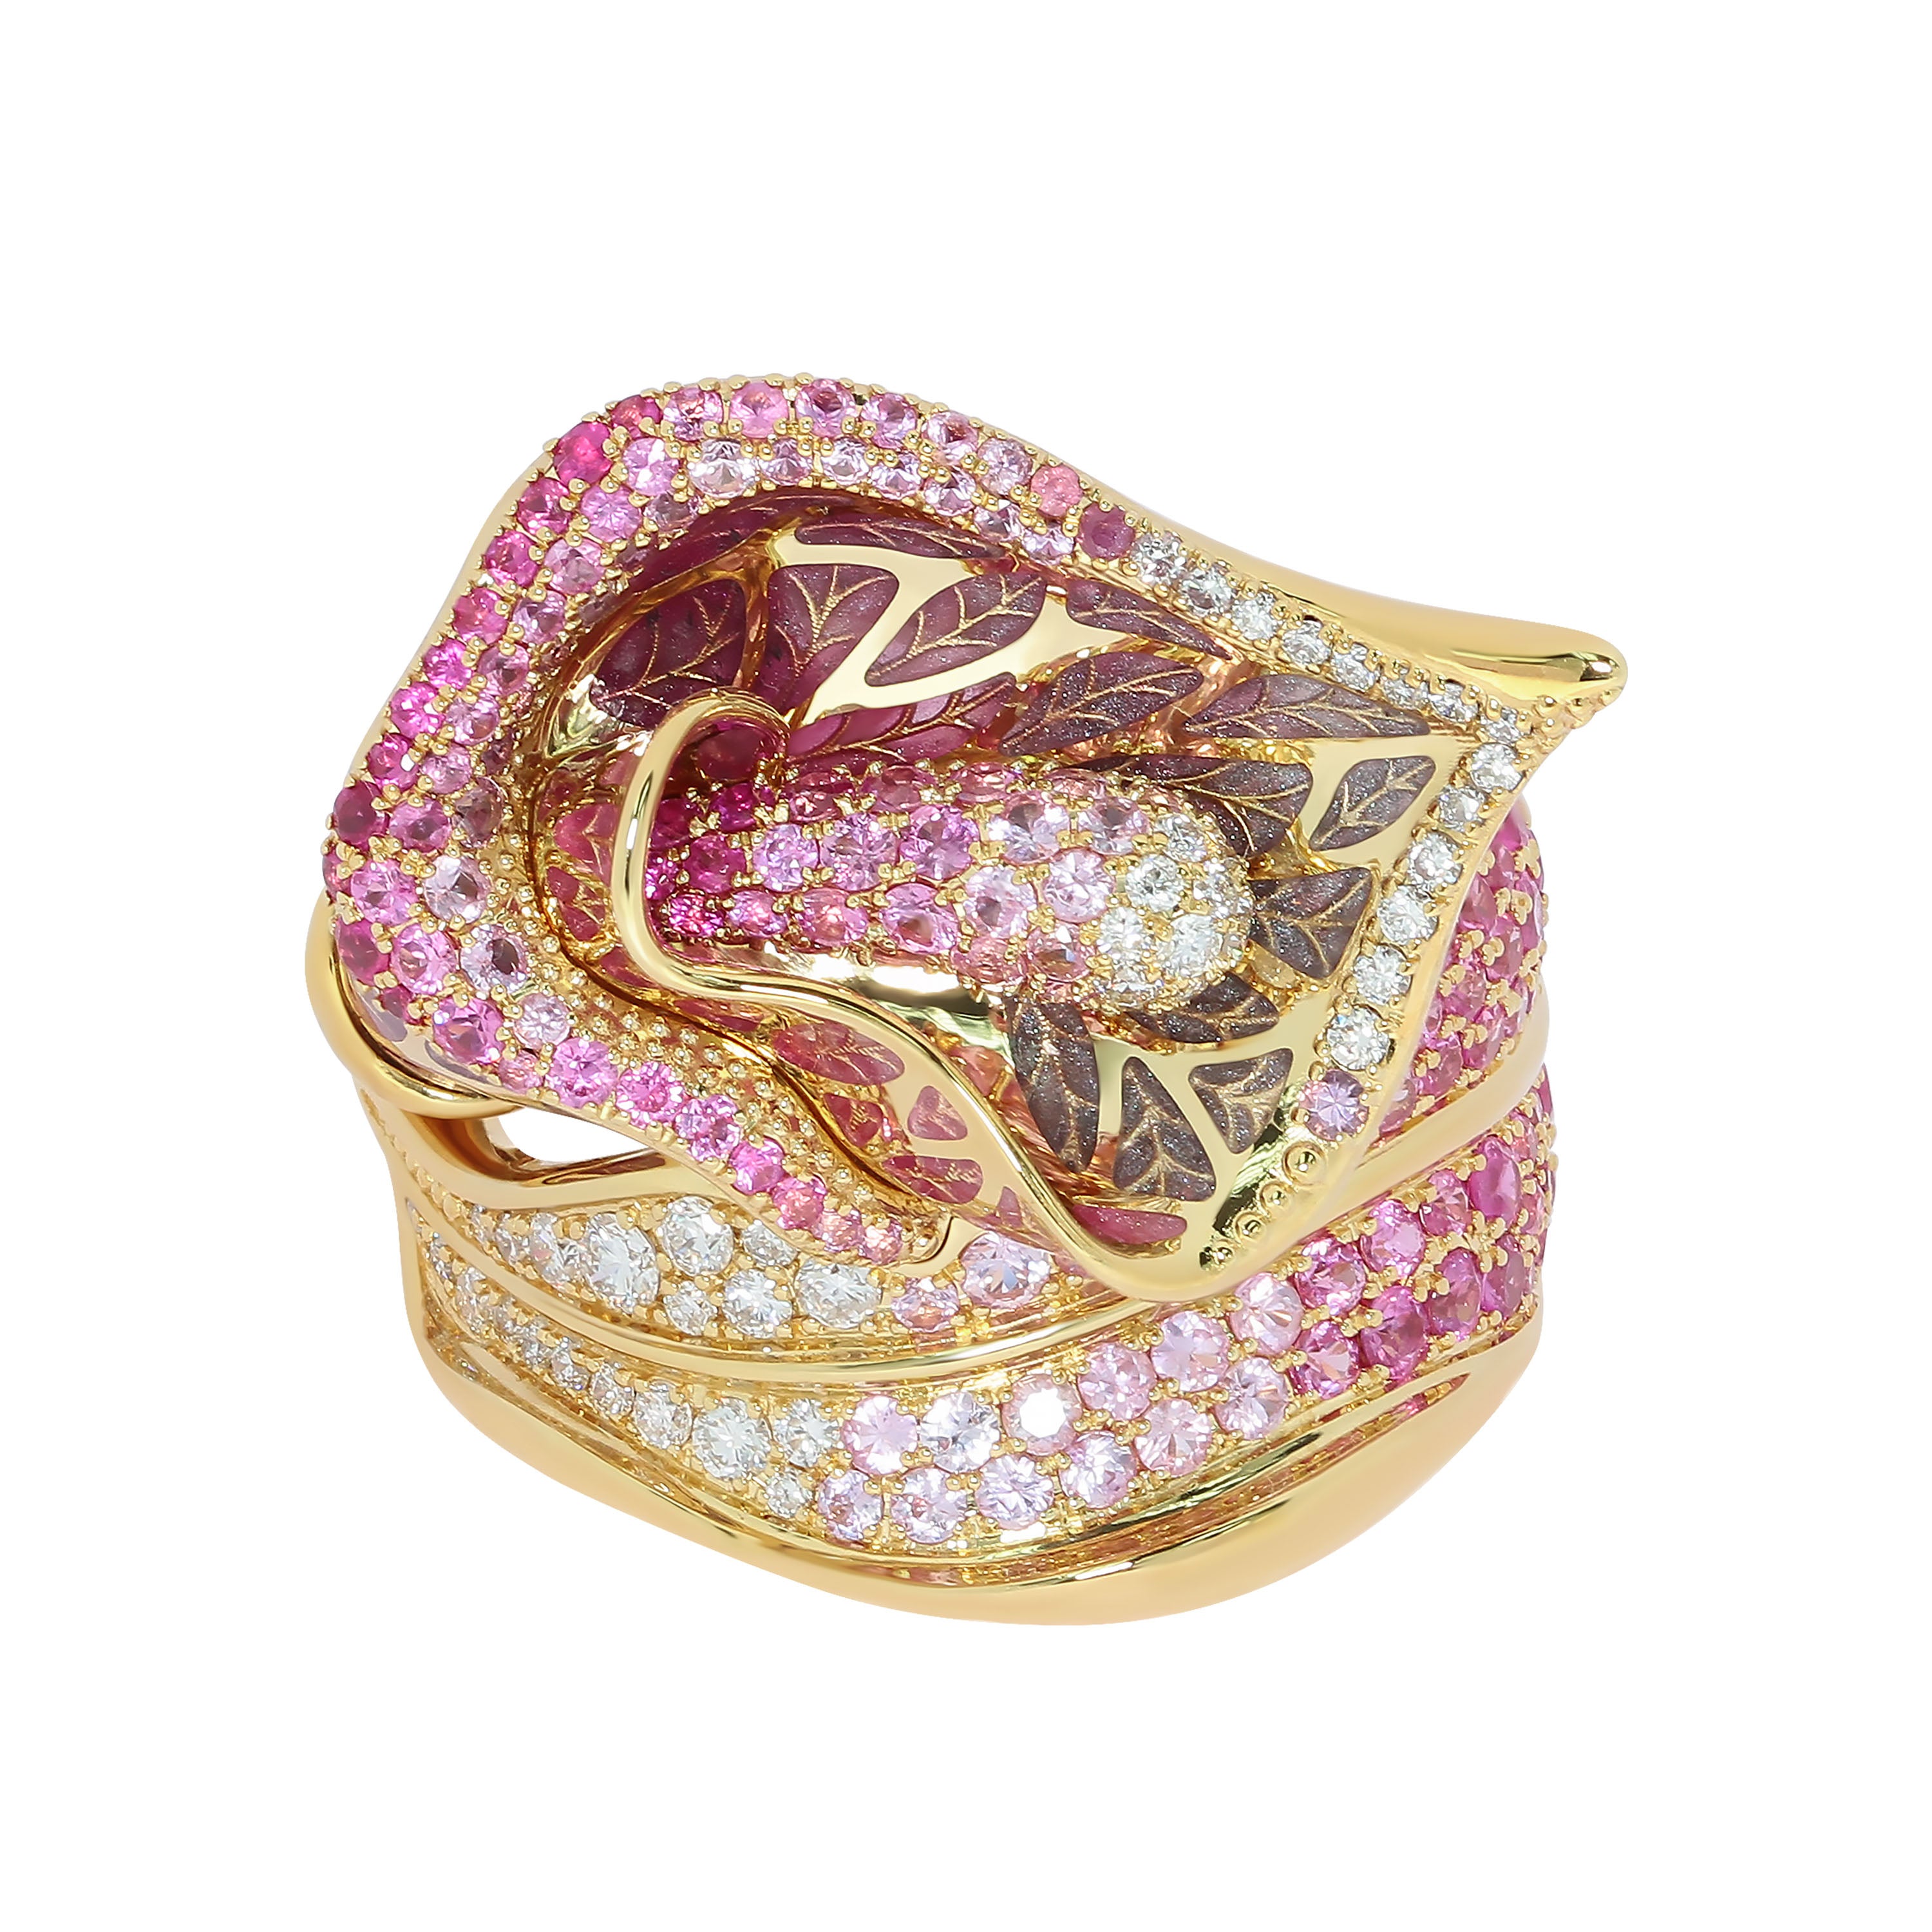 R 0275-7, 18K Yellow Gold, Enamel, Pink Sapphires, Diamonds Ring